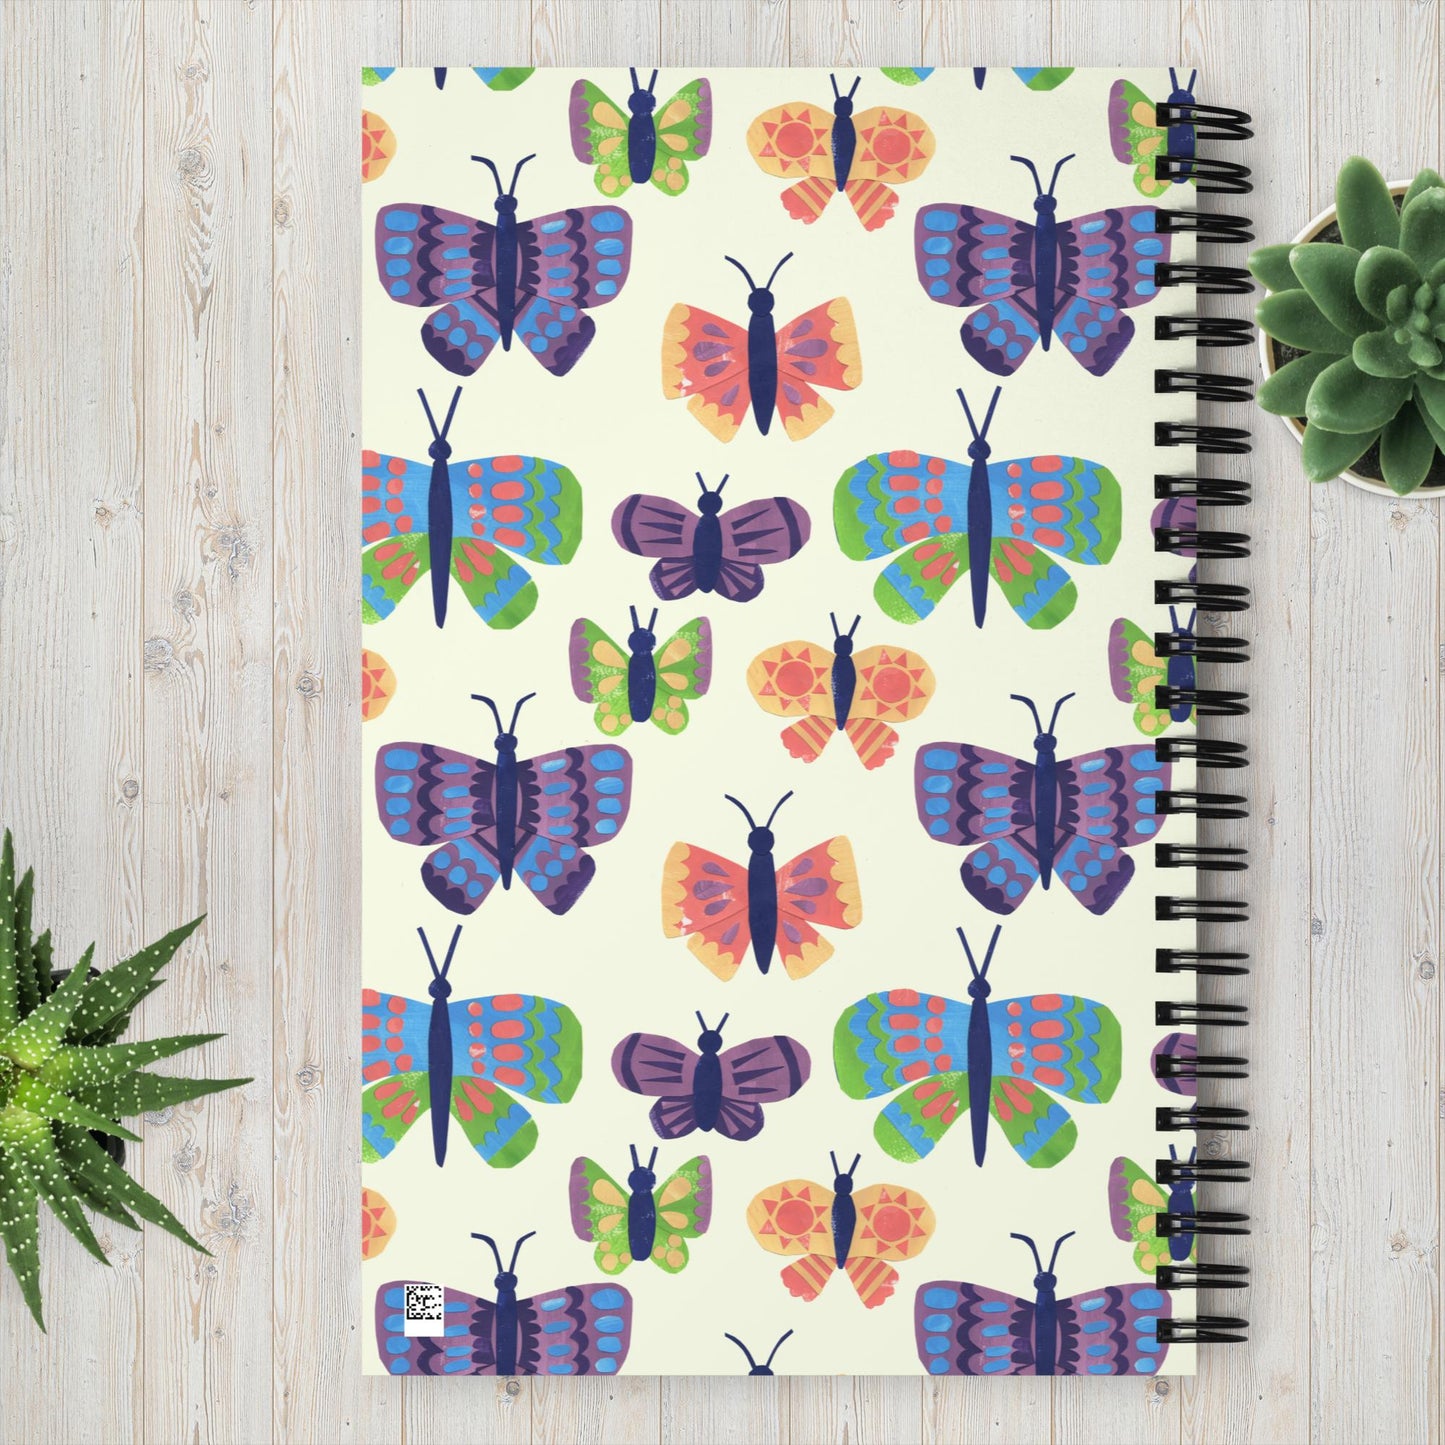 Colorful Butterflies Spiral notebook